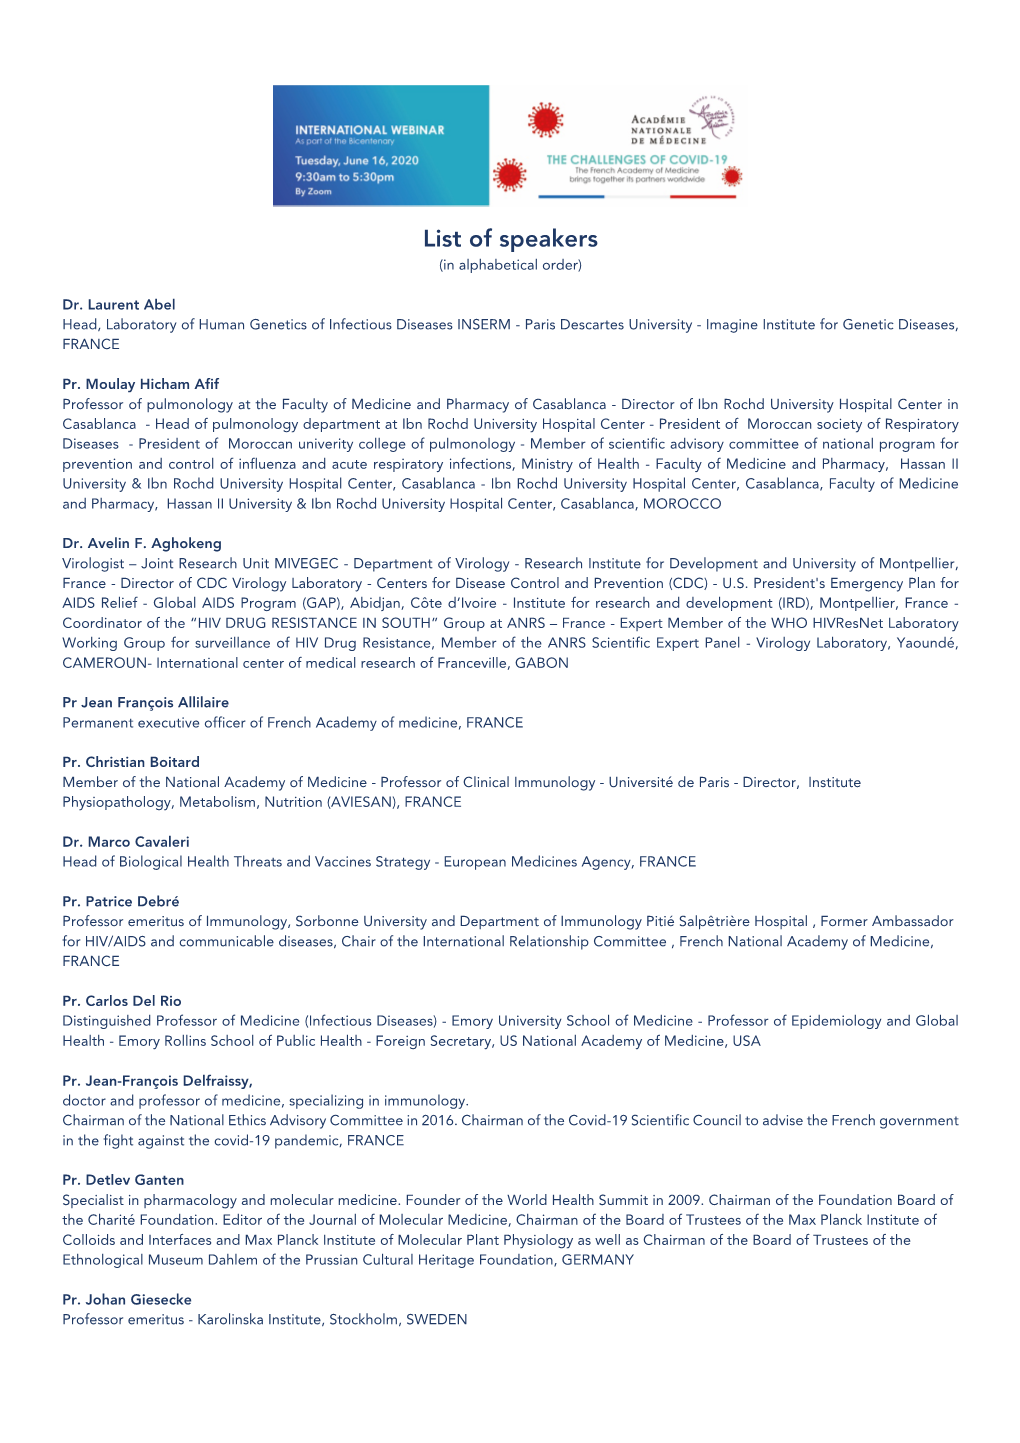 List of Speakers (In Alphabetical Order)